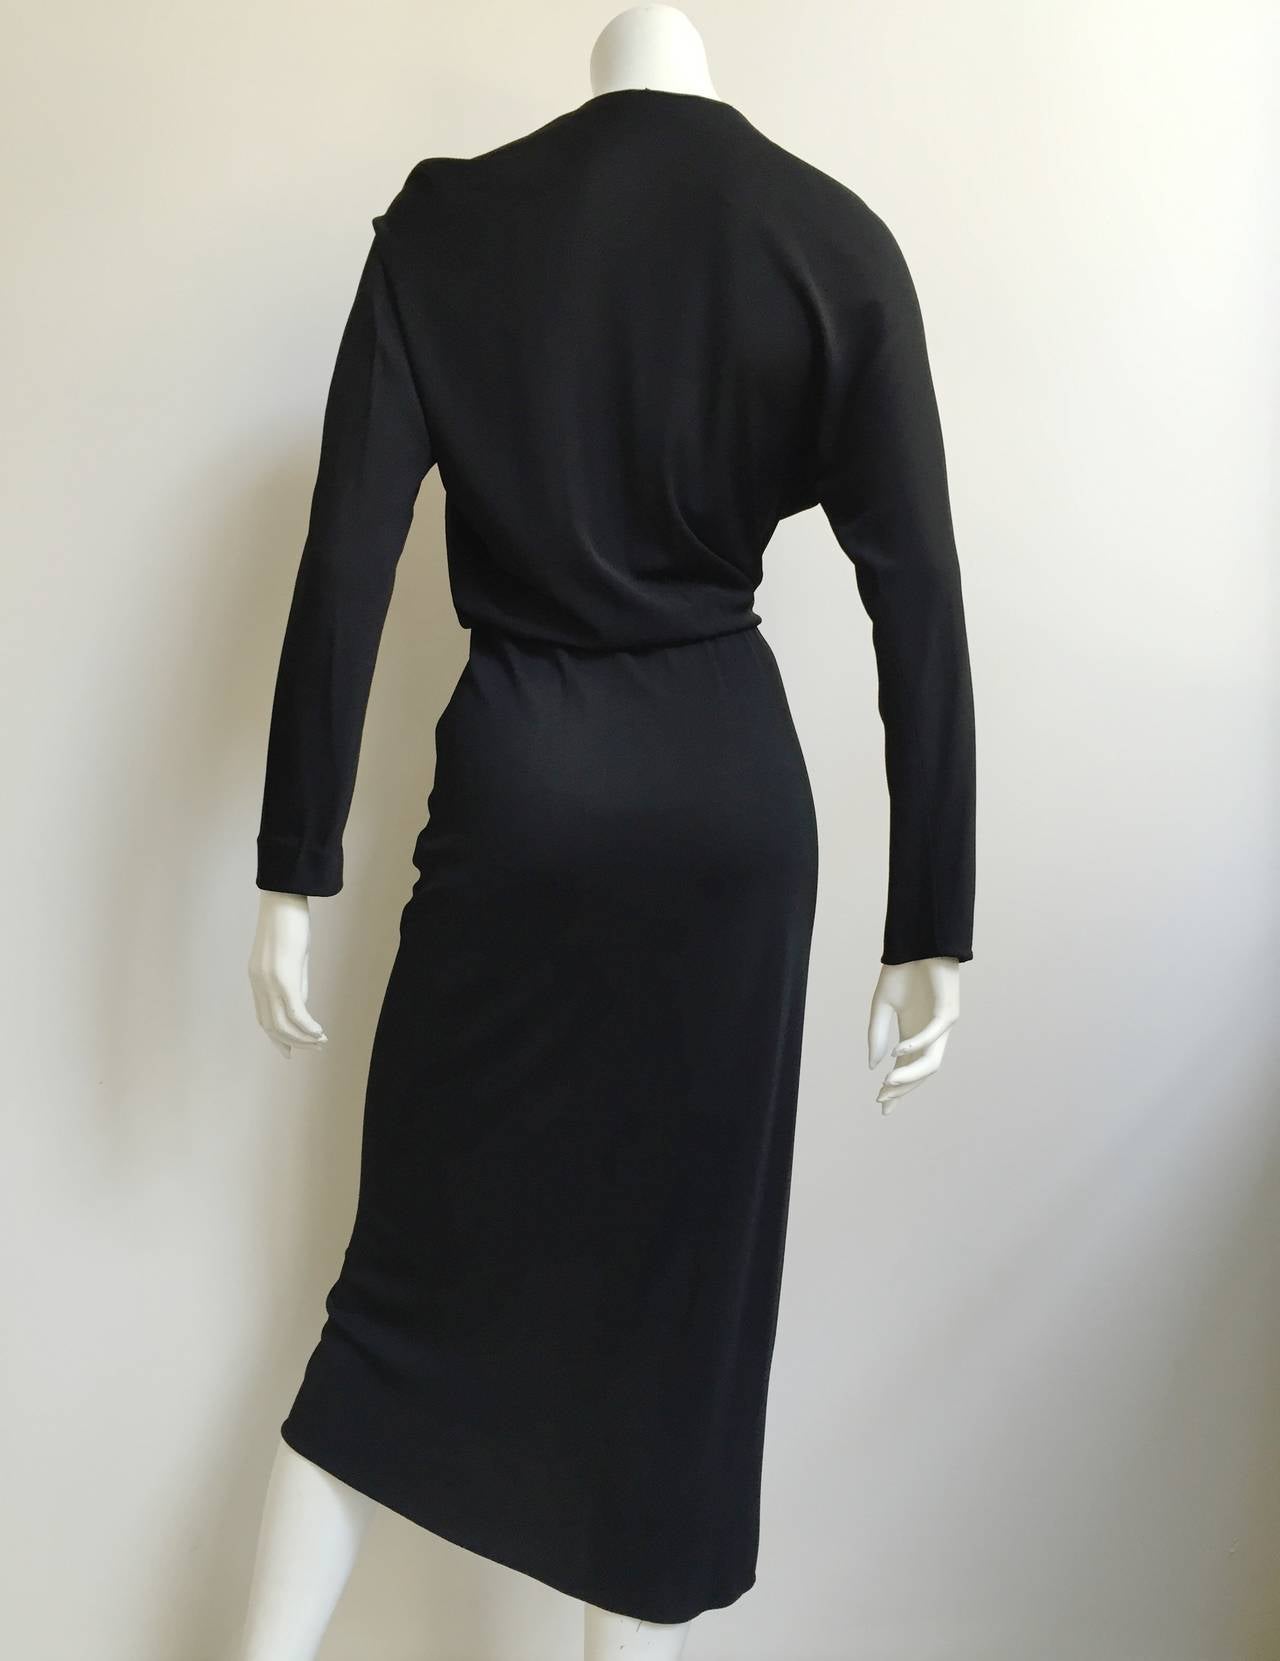 Halston 70s Black Wrap Dress size 4. 1